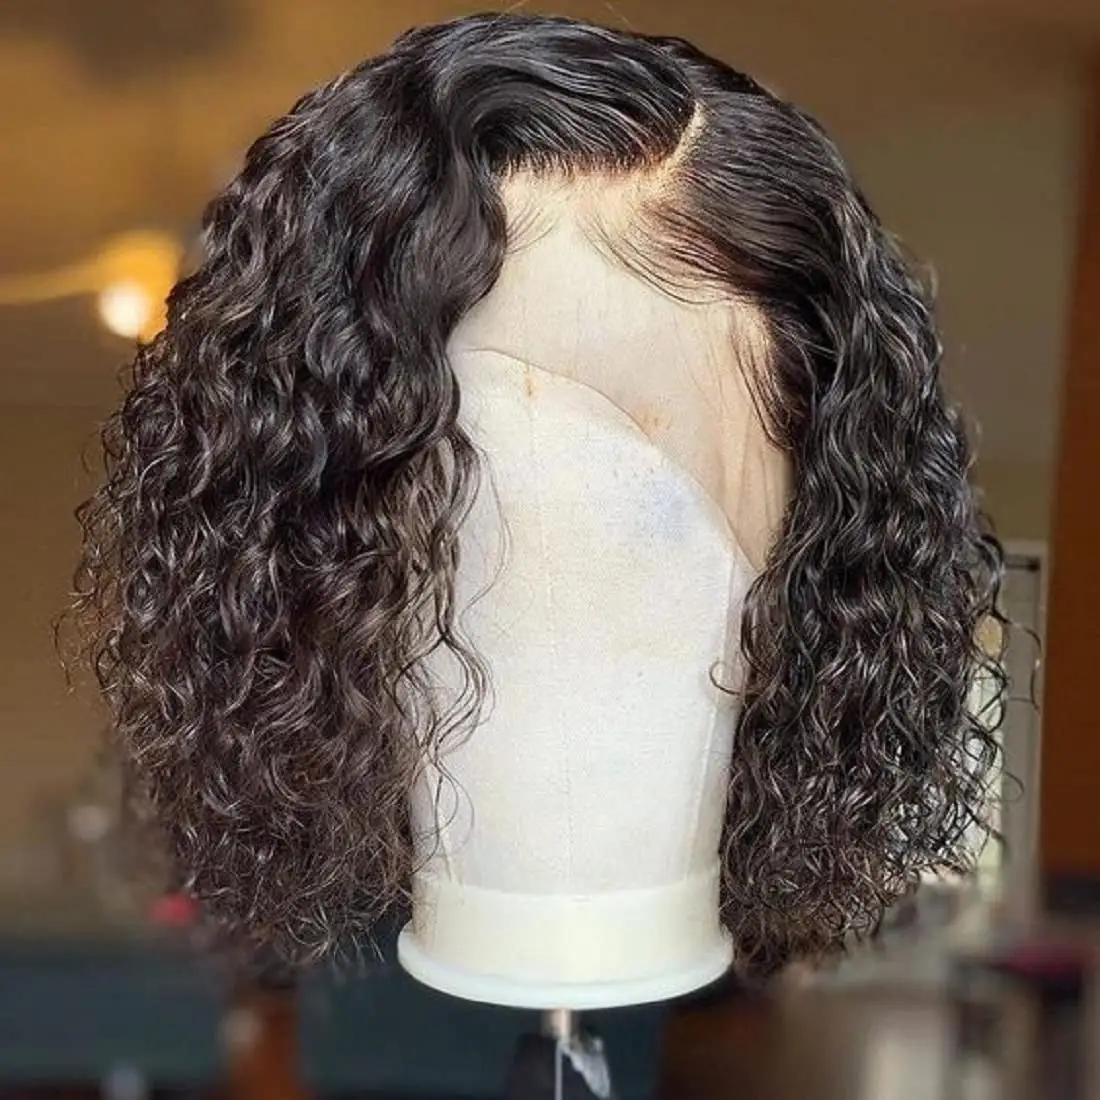 Cheap 13x4 Short Pixie Cut Wig 8-14 inch Transparent HD Short Pixie Curly Bob Human Hair Afro Curly 4x4 Closure Short Cut Wigs